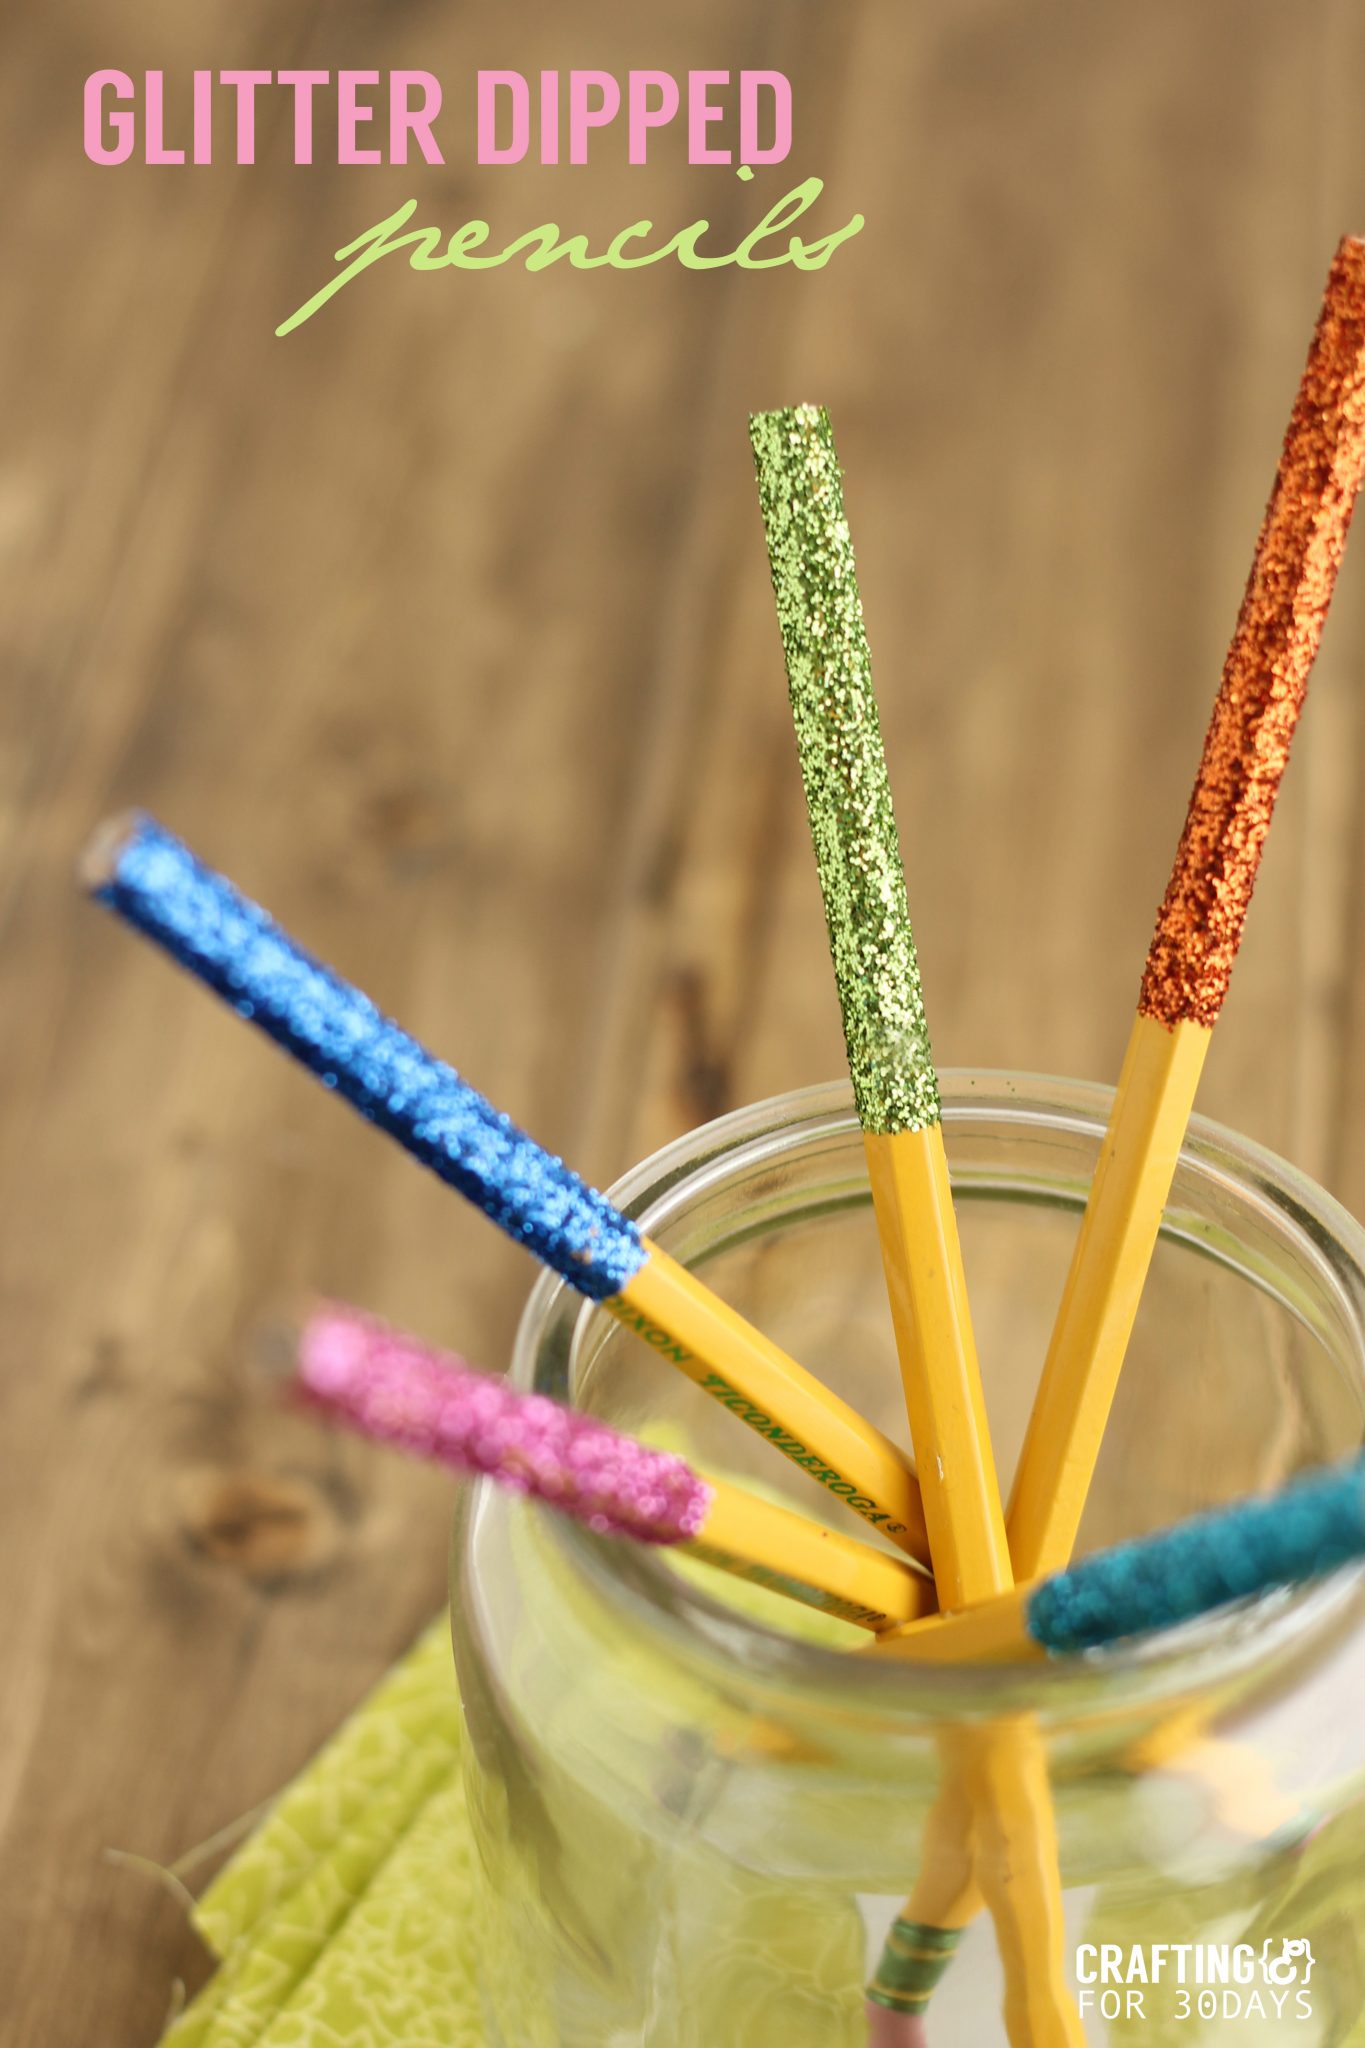 DIY Glitter Pencils {Back to School Craft} - My Frugal Adventures